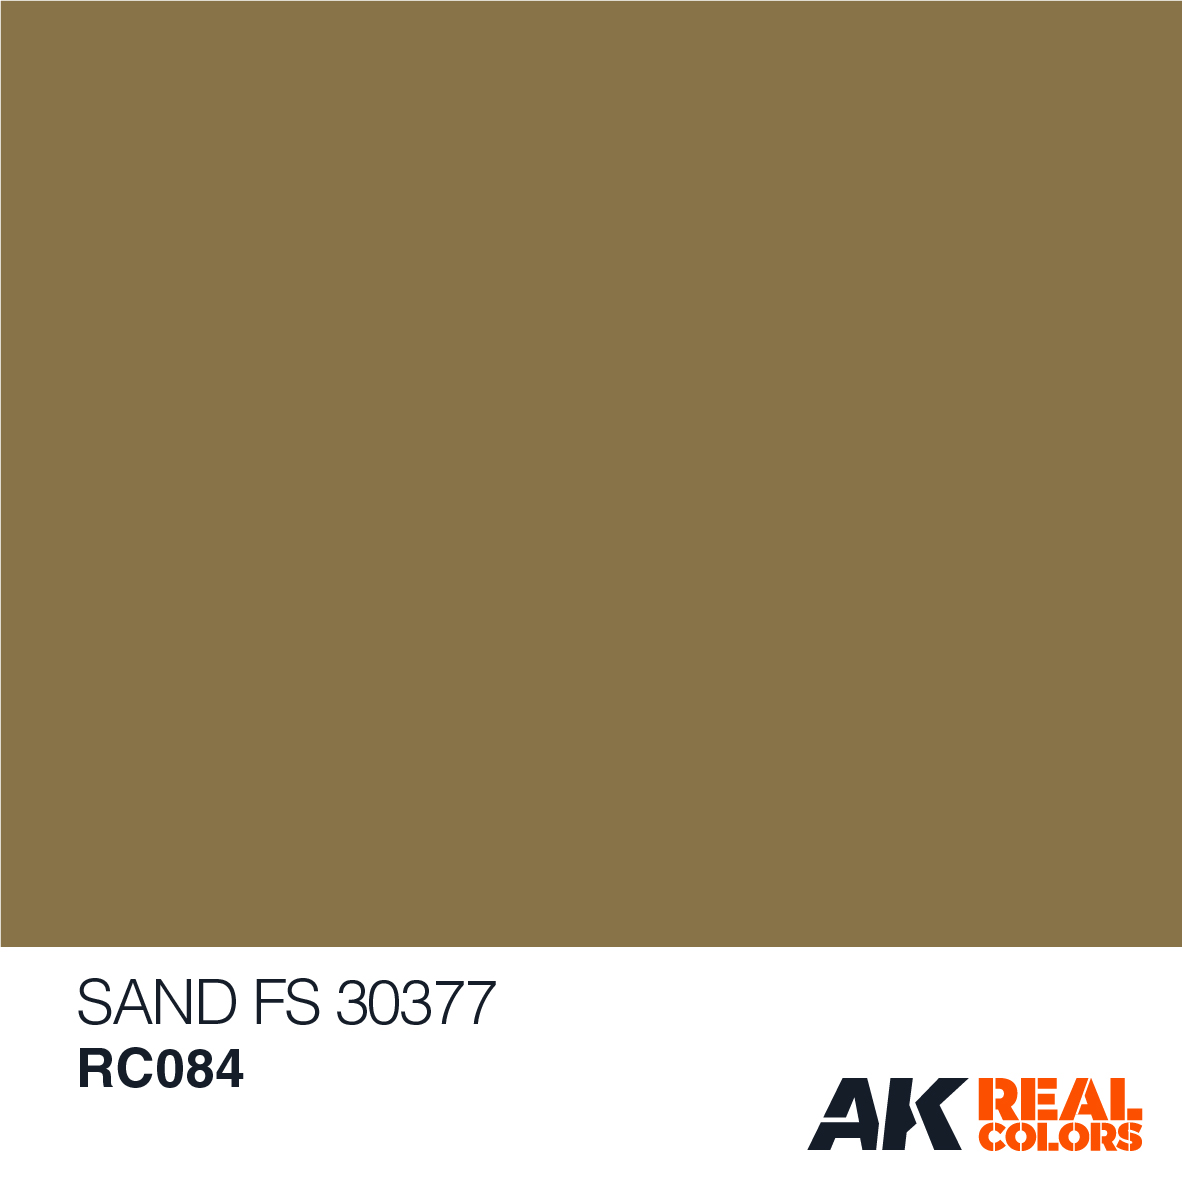 Sand FS 30277